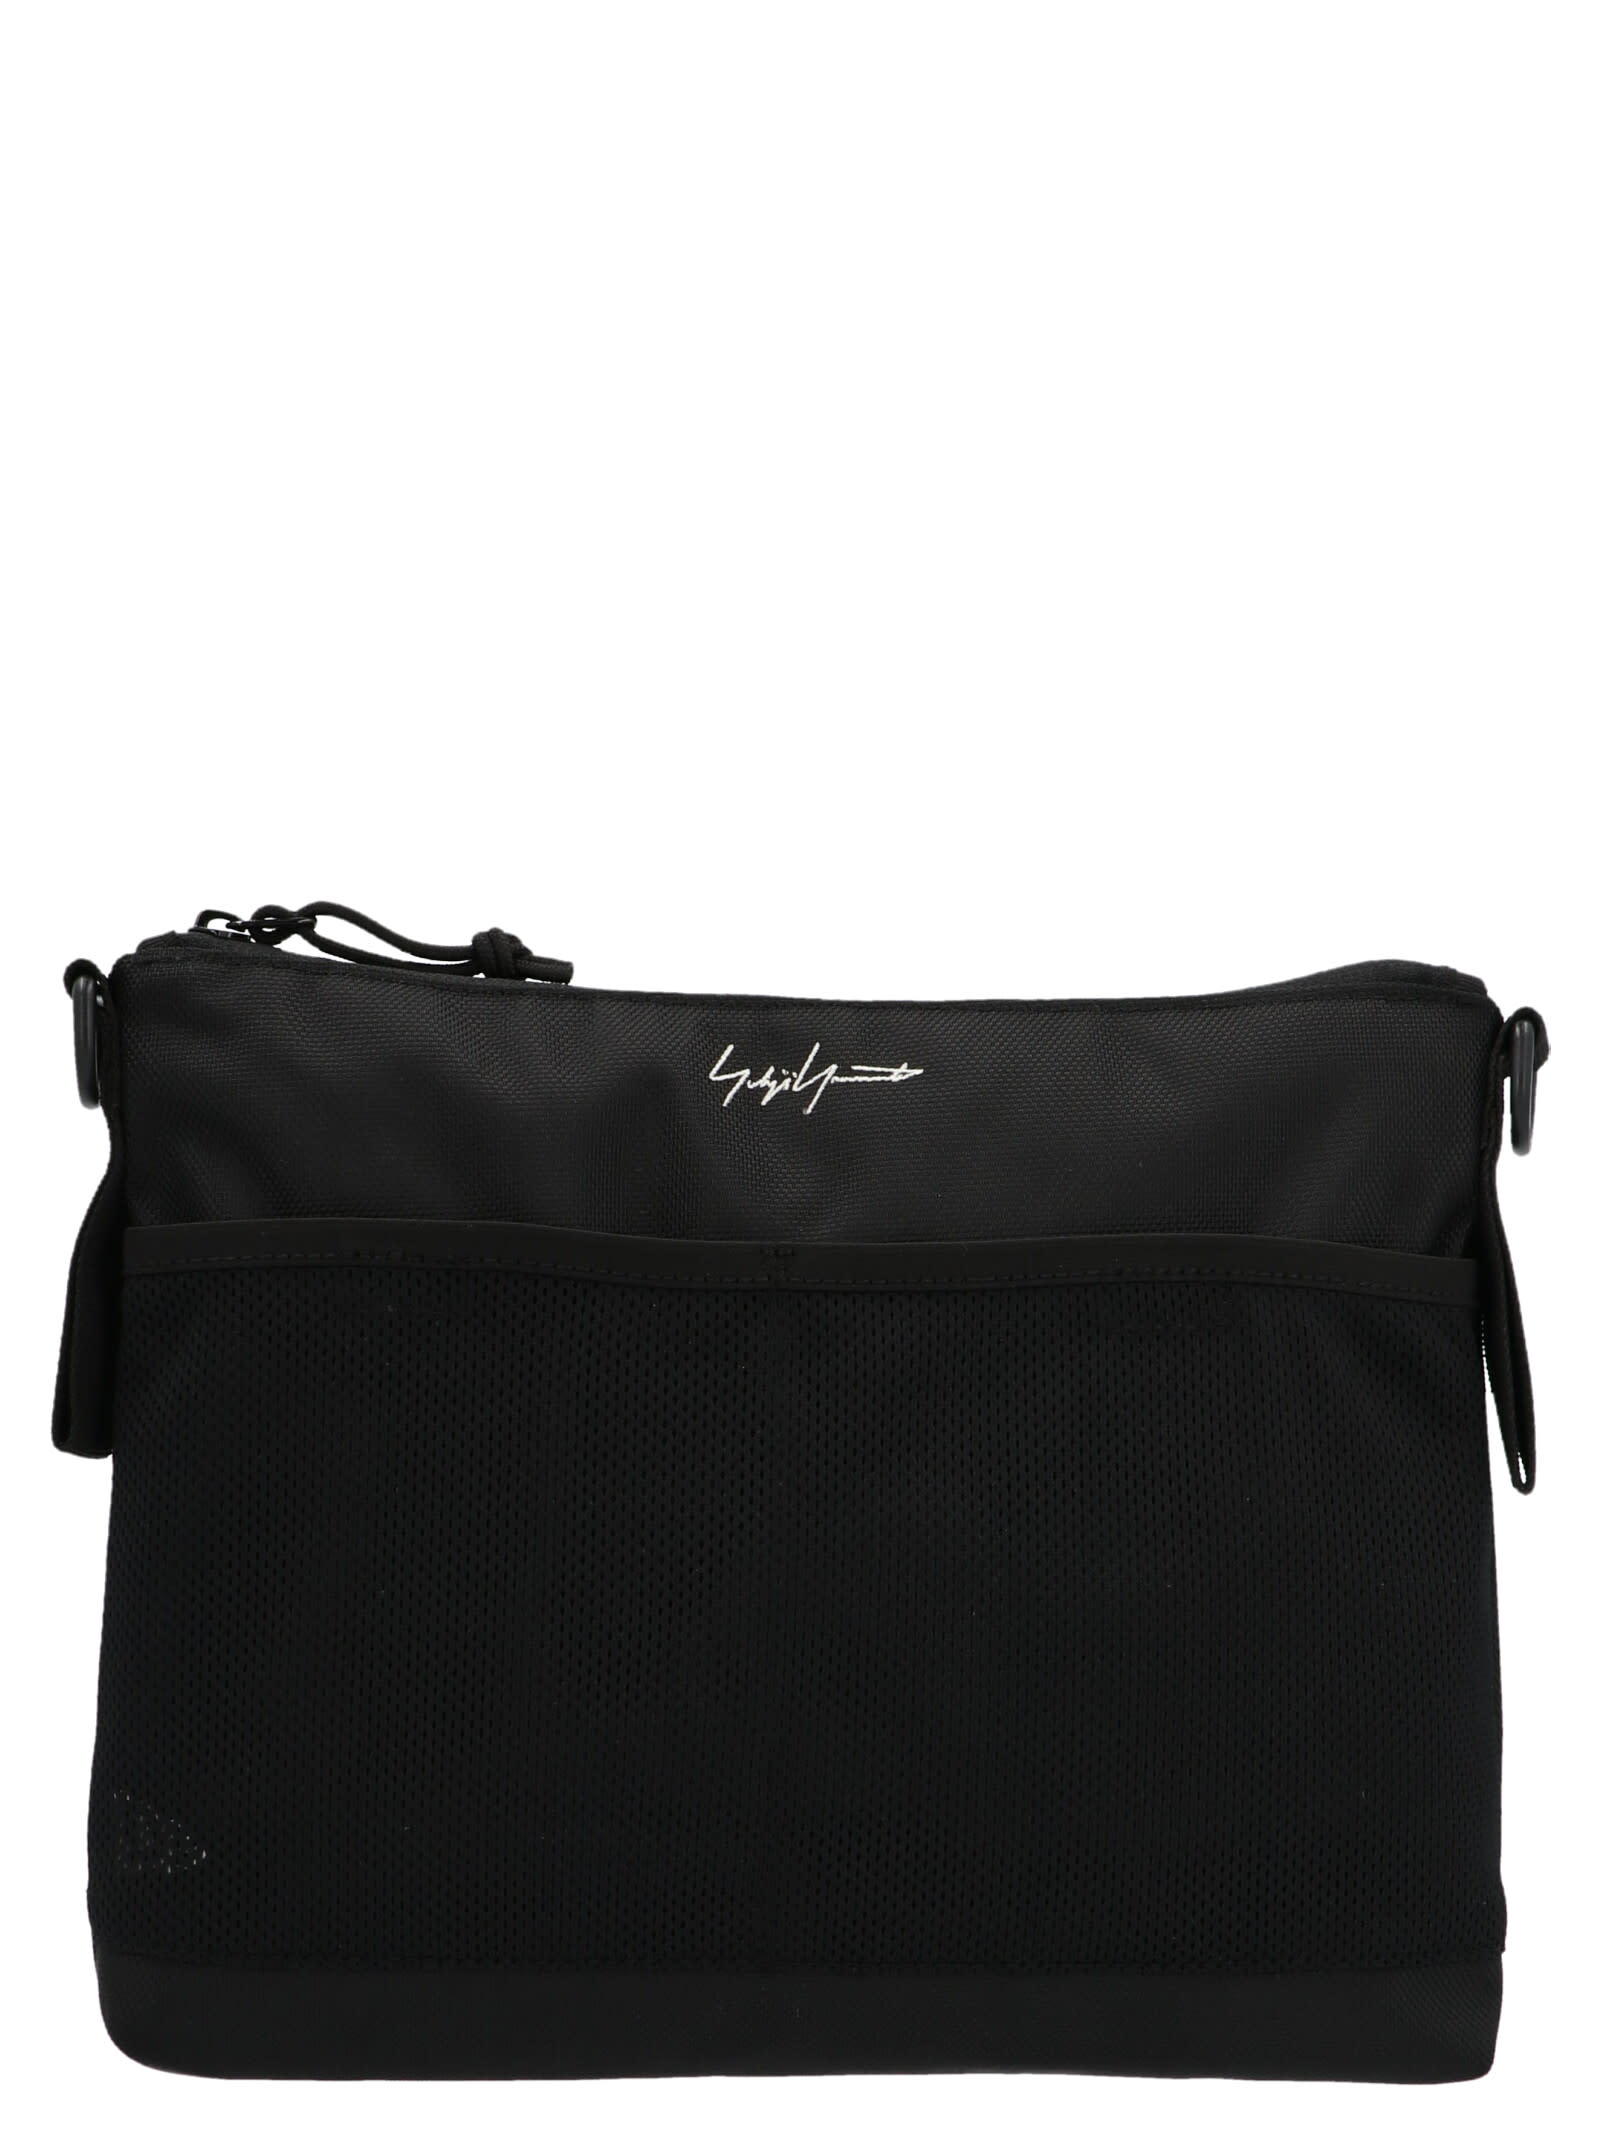 Yohji Yamamoto Bag In Black